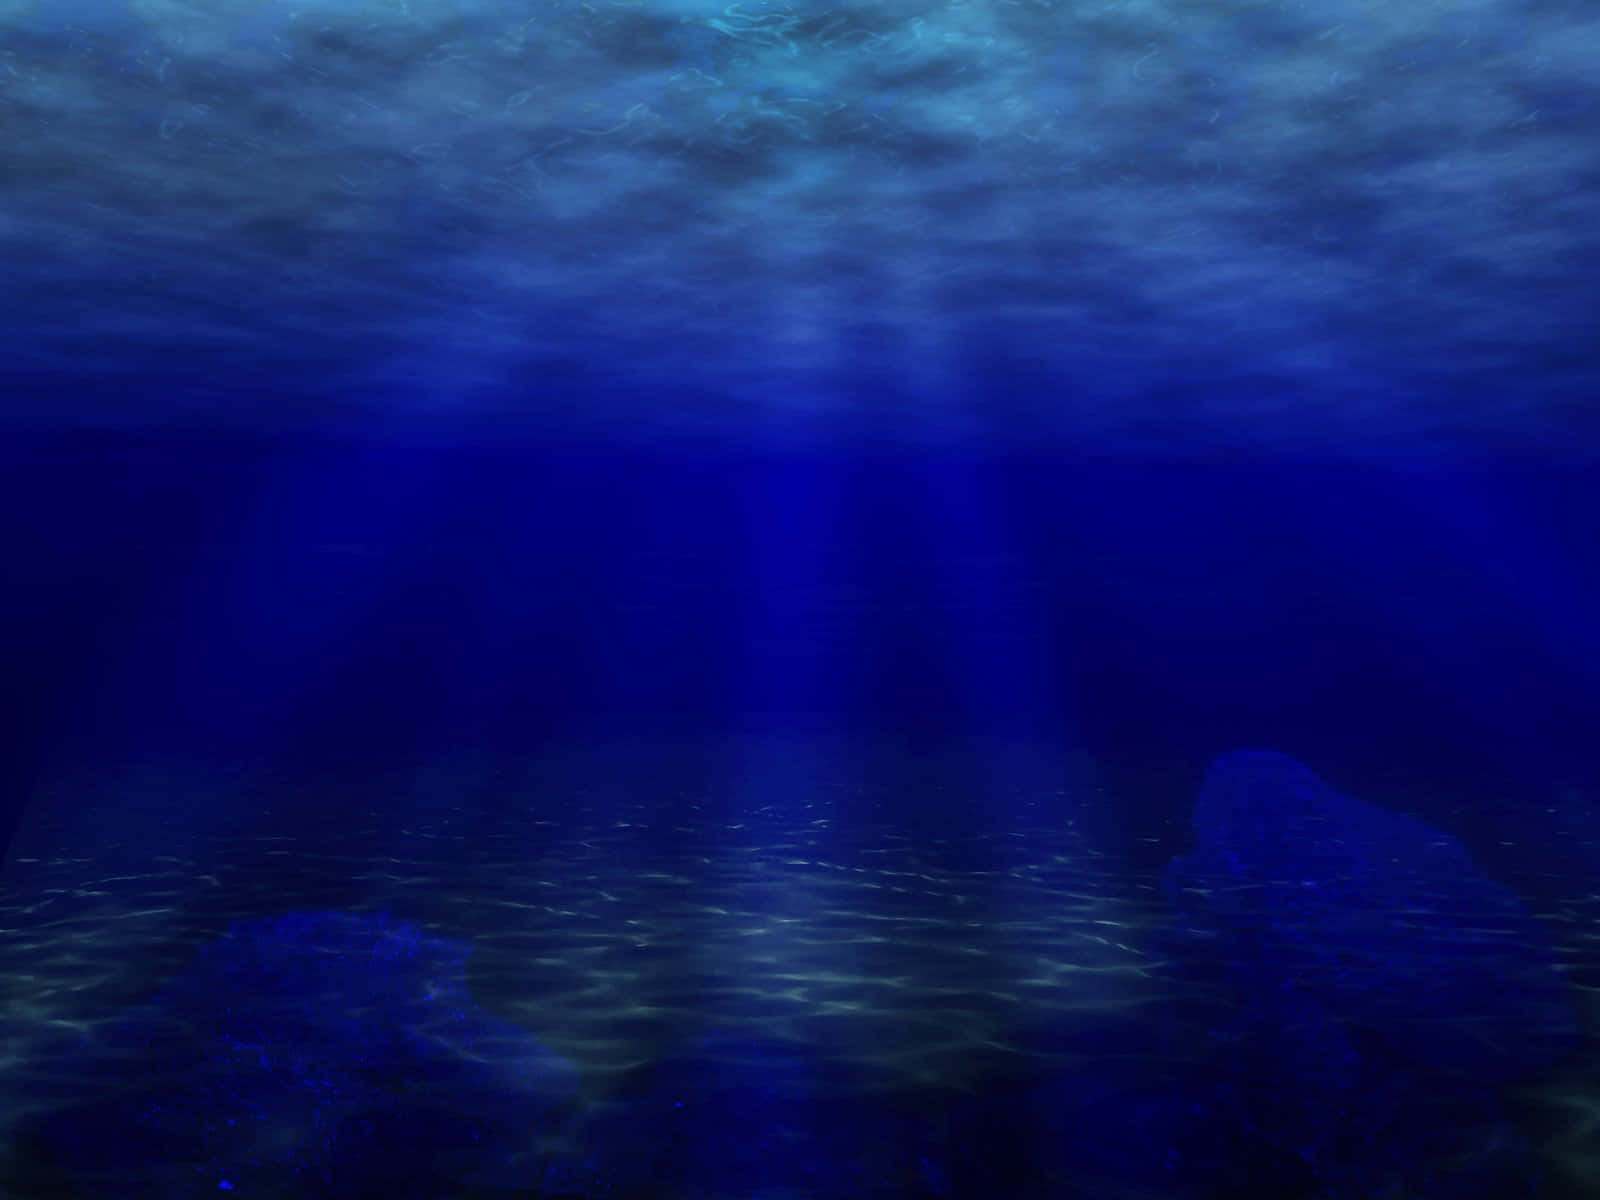 "Explore the Amazing Wonders Of the Underwater World!"